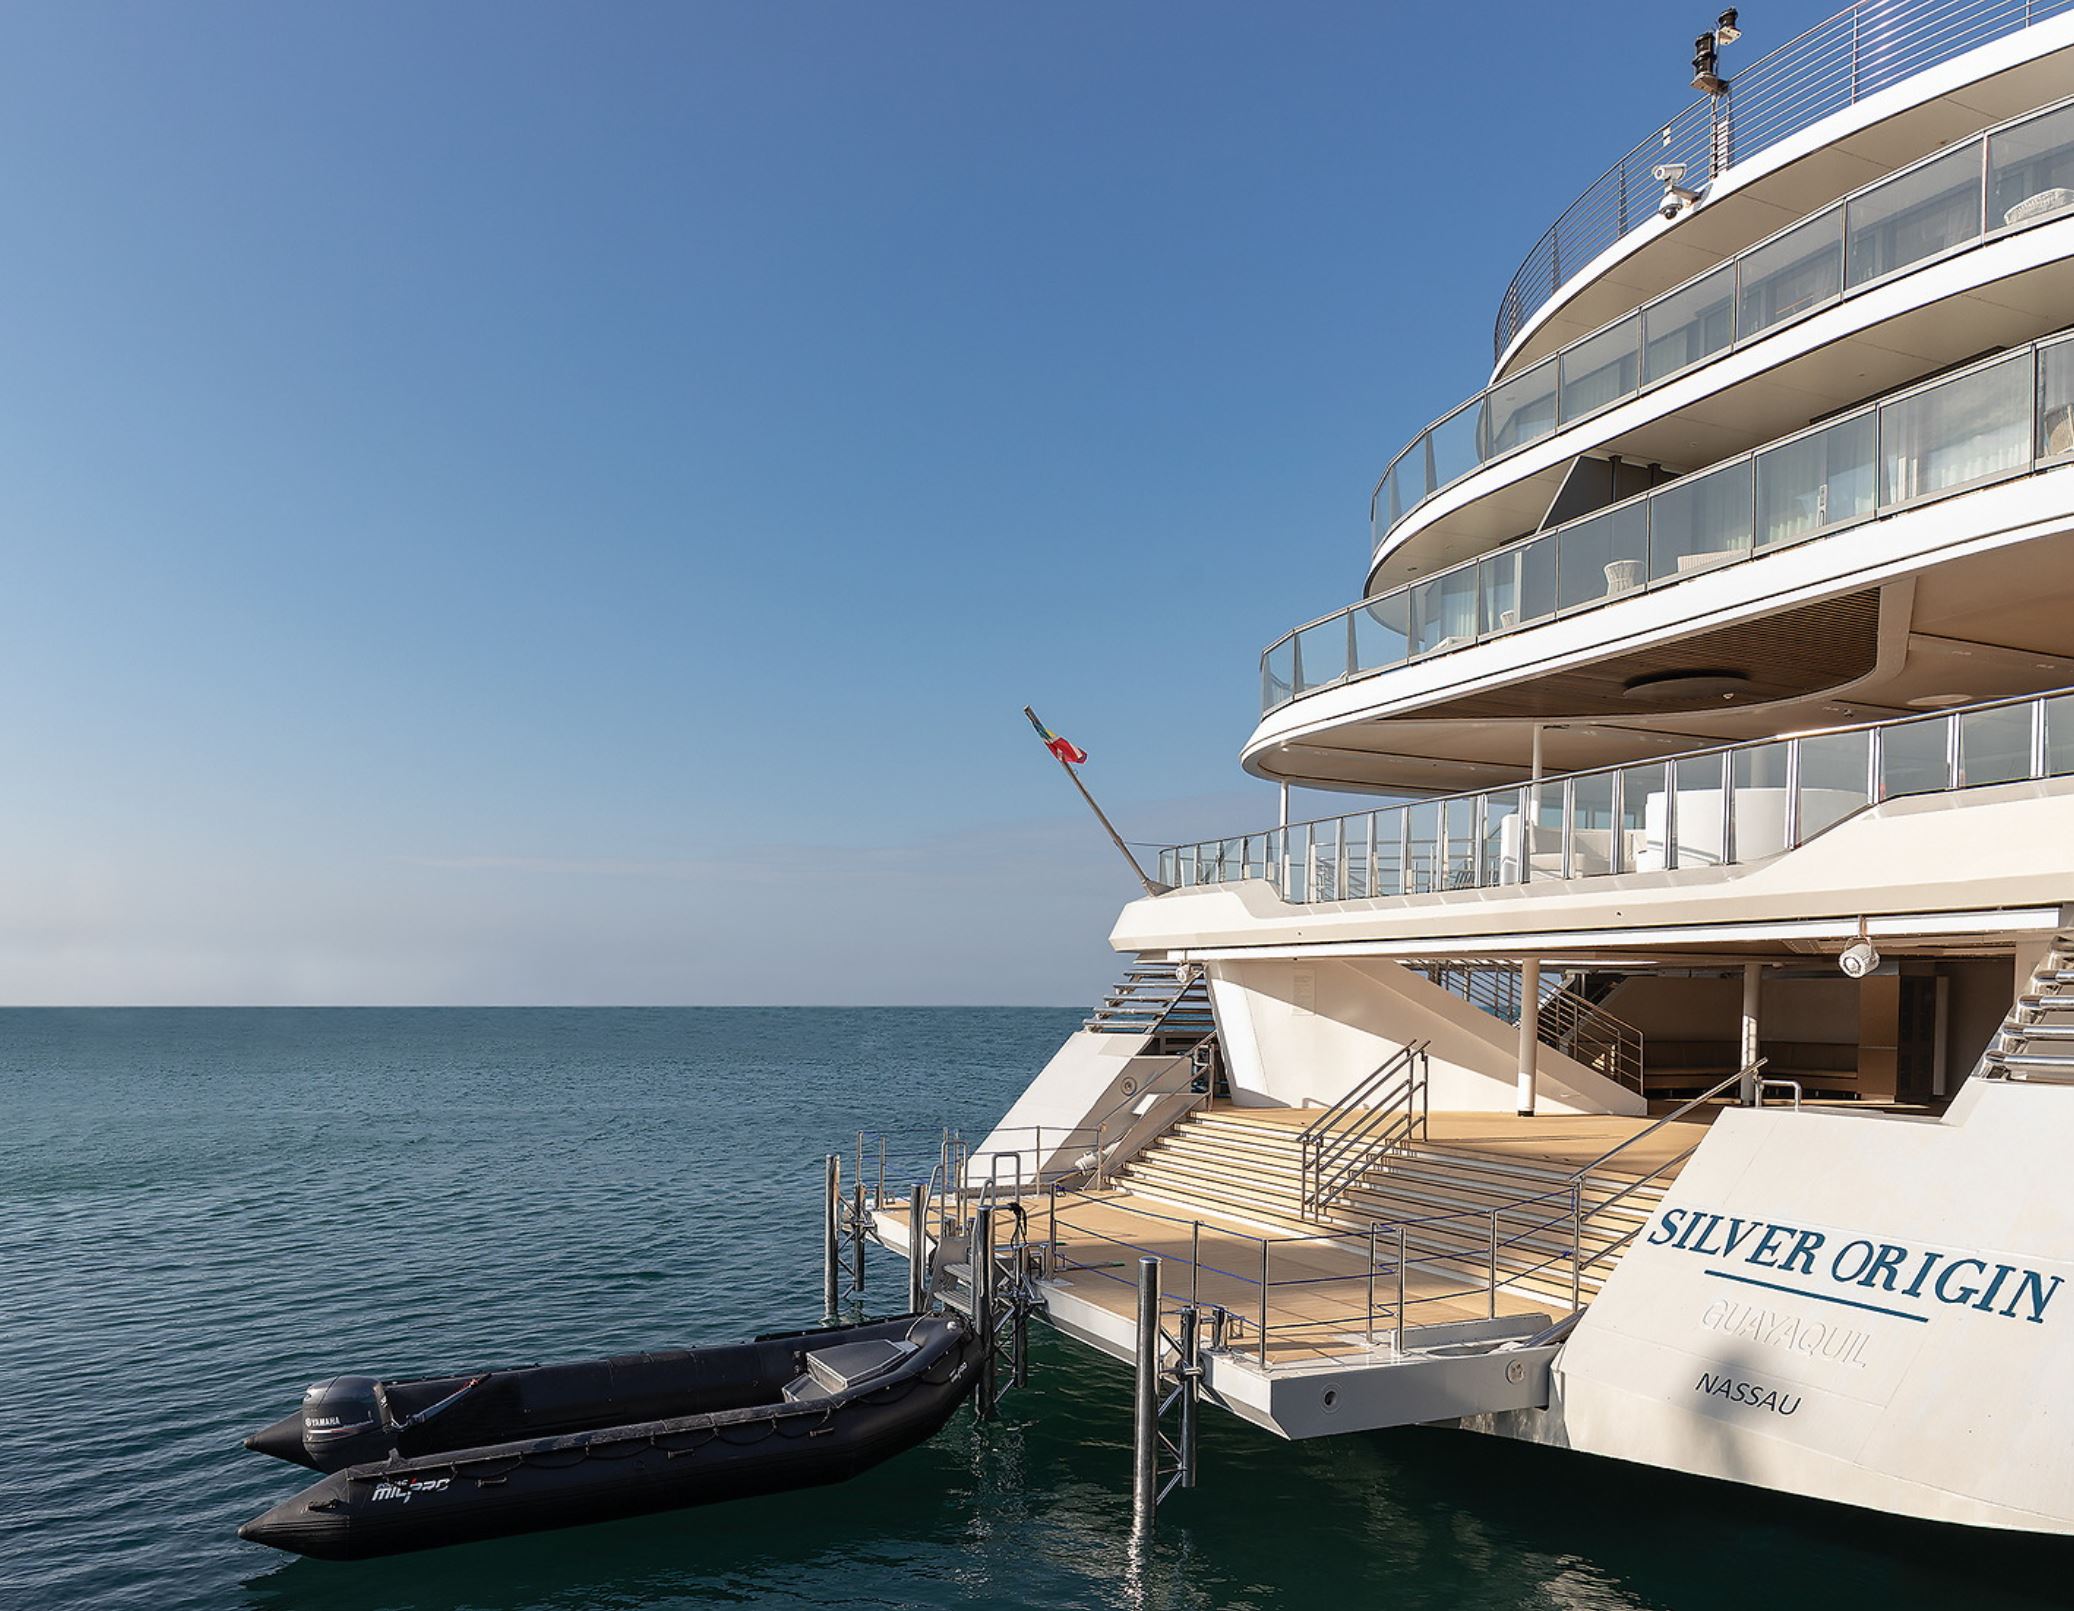 Silver Origin Silversea De luxe cruise ship: Silver Origin Silverseas de Luxe Schiff 8 Tage/7 Nächte Kreuzfahrt